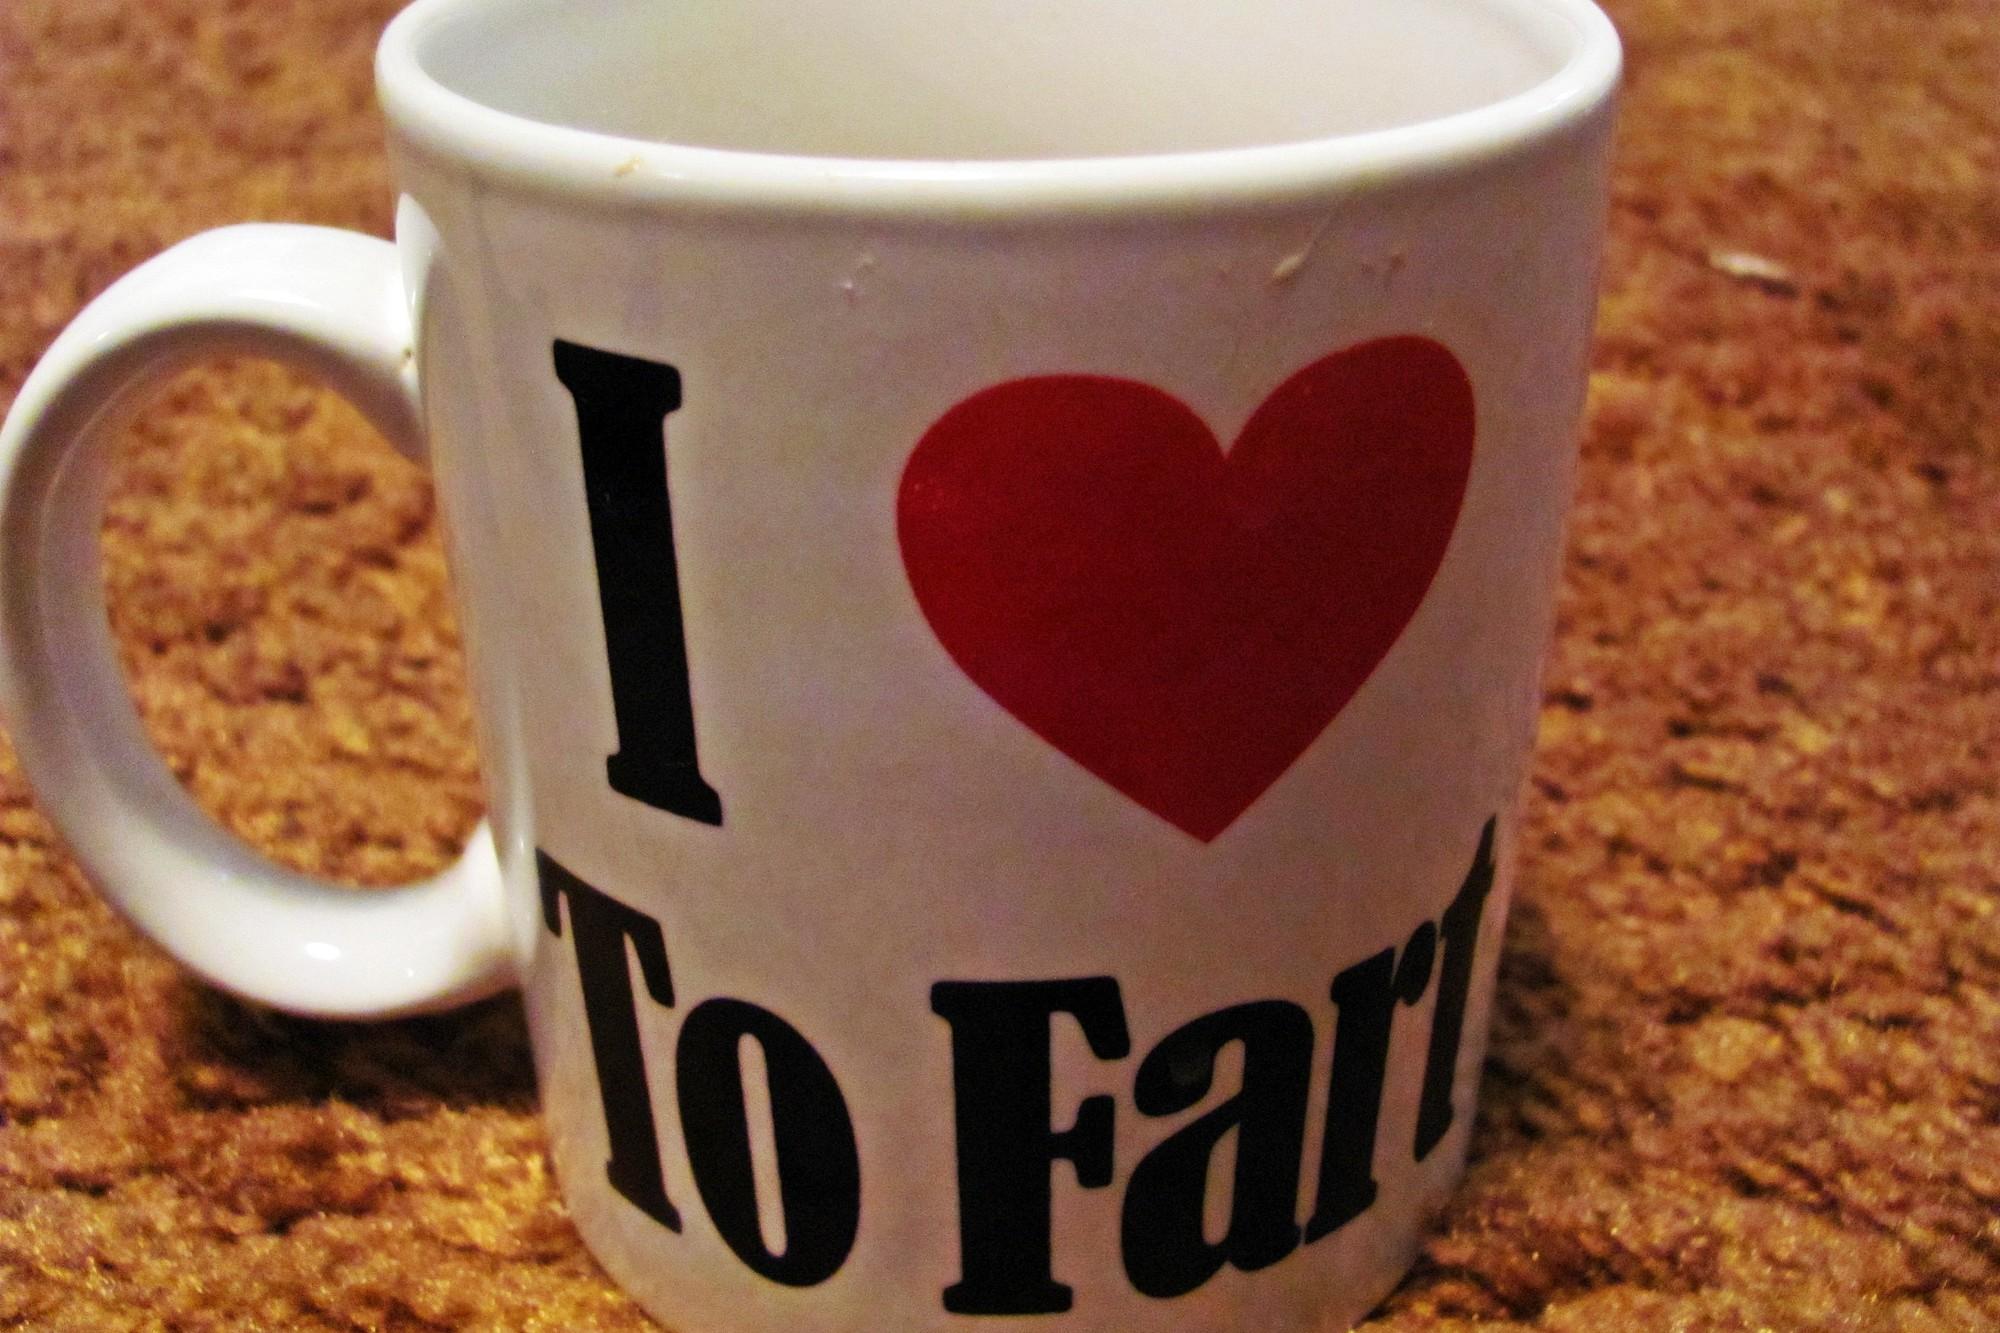 Funny fart mug wallpaper. PC